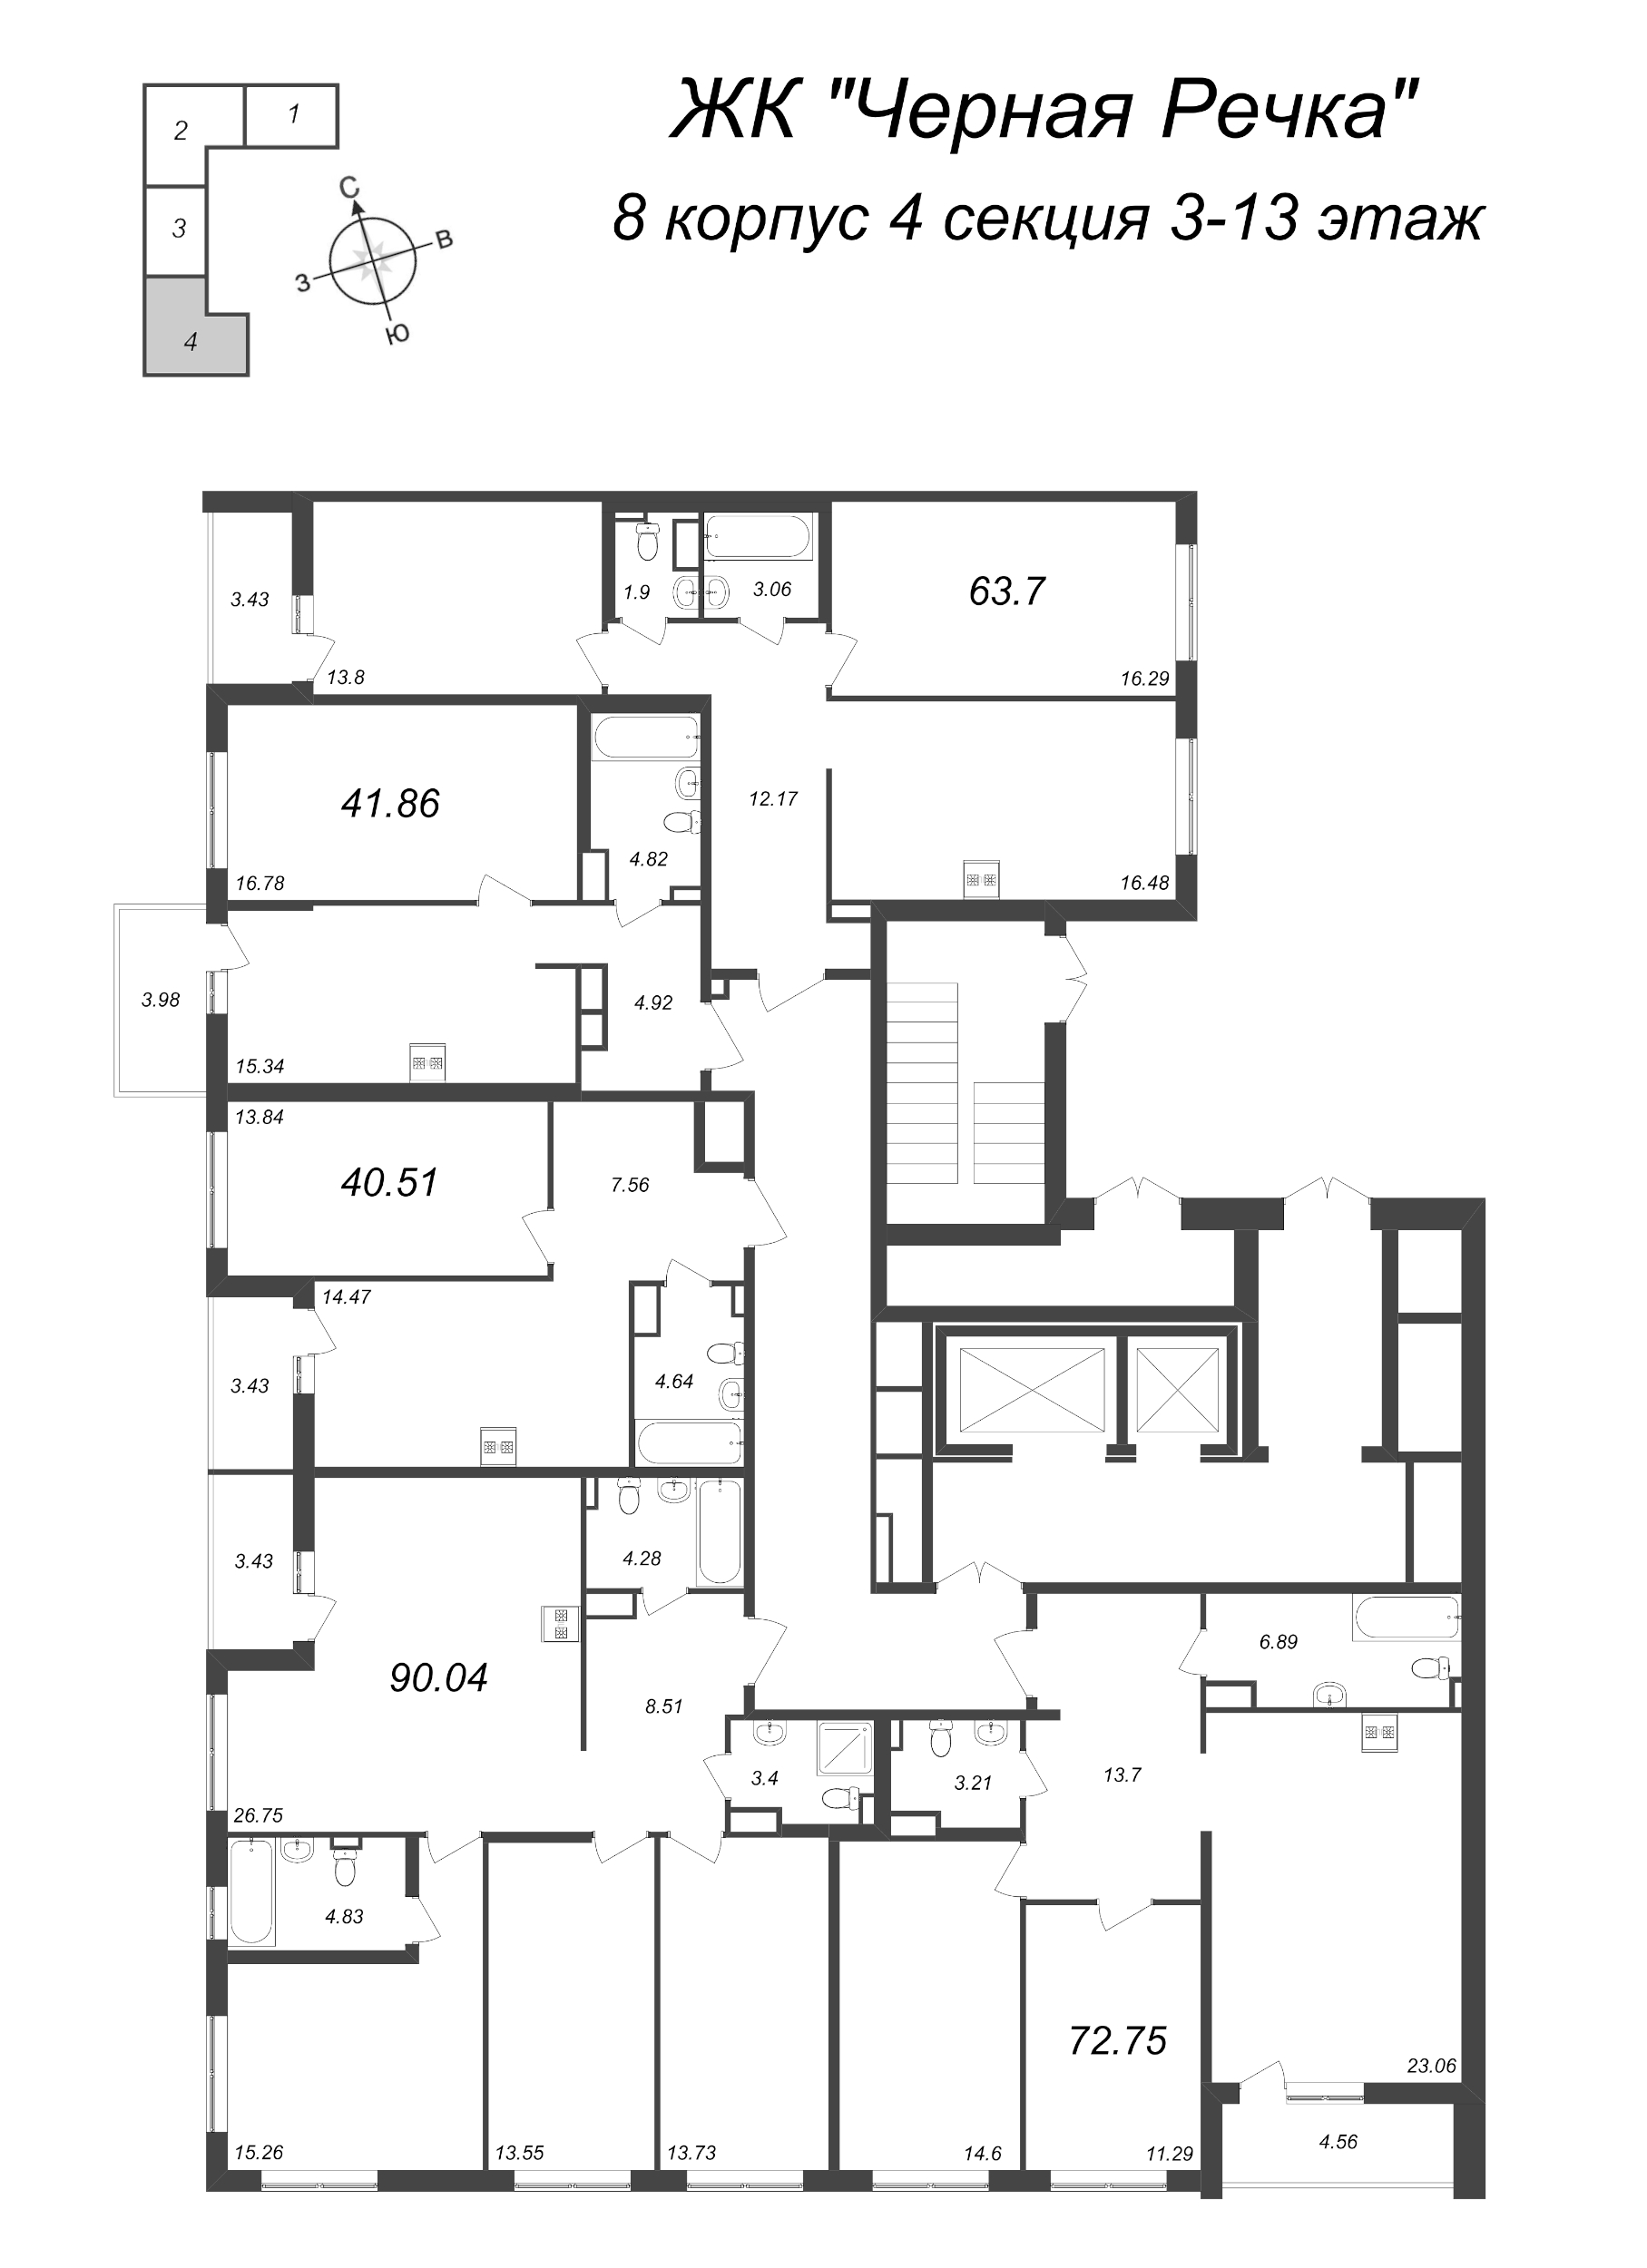 2-комнатная (Евро) квартира, 37.27 м² - планировка этажа